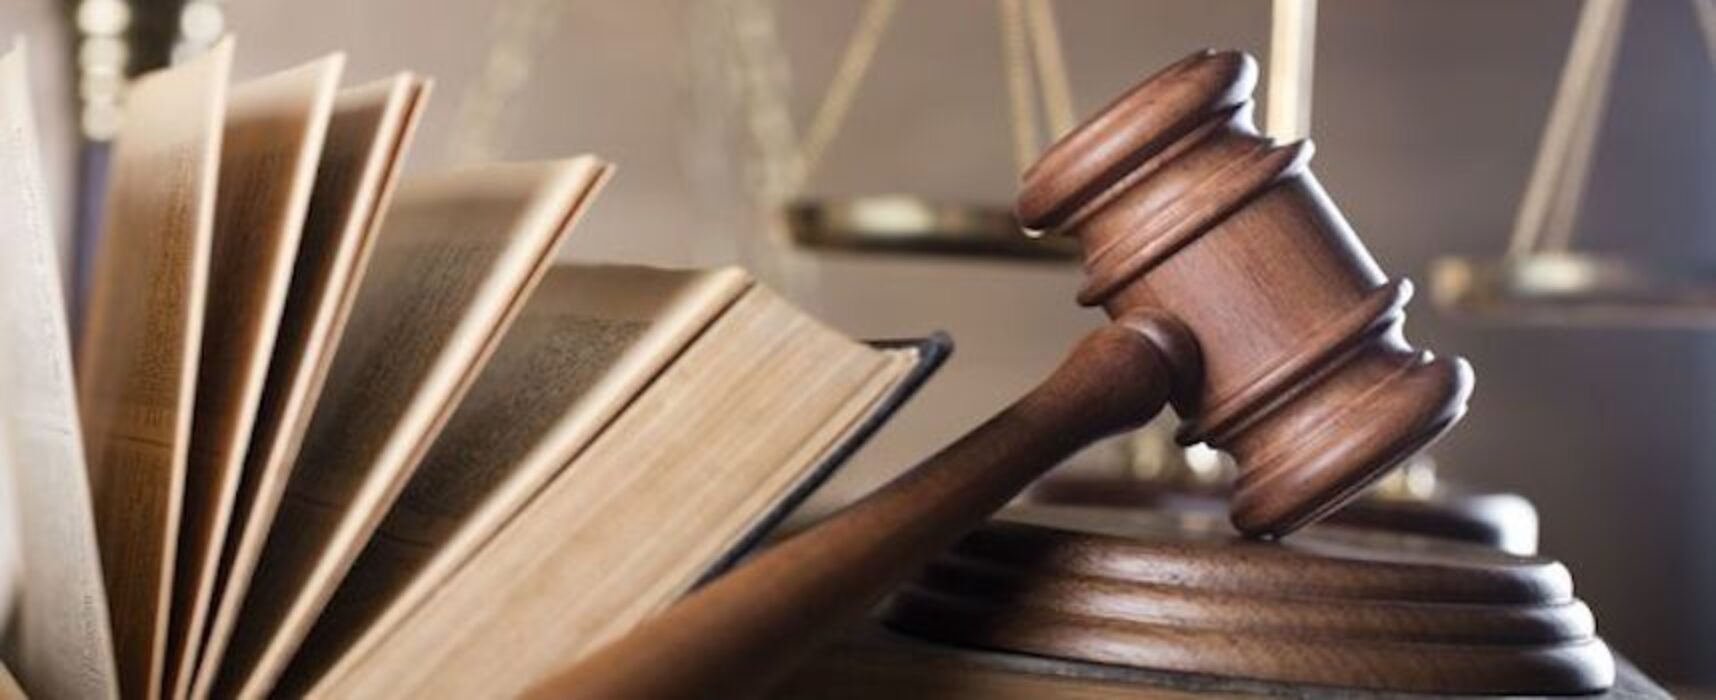 Elezioni Cassa Forense: l’Associazione Avvocati Bisceglie sostiene Lista 2